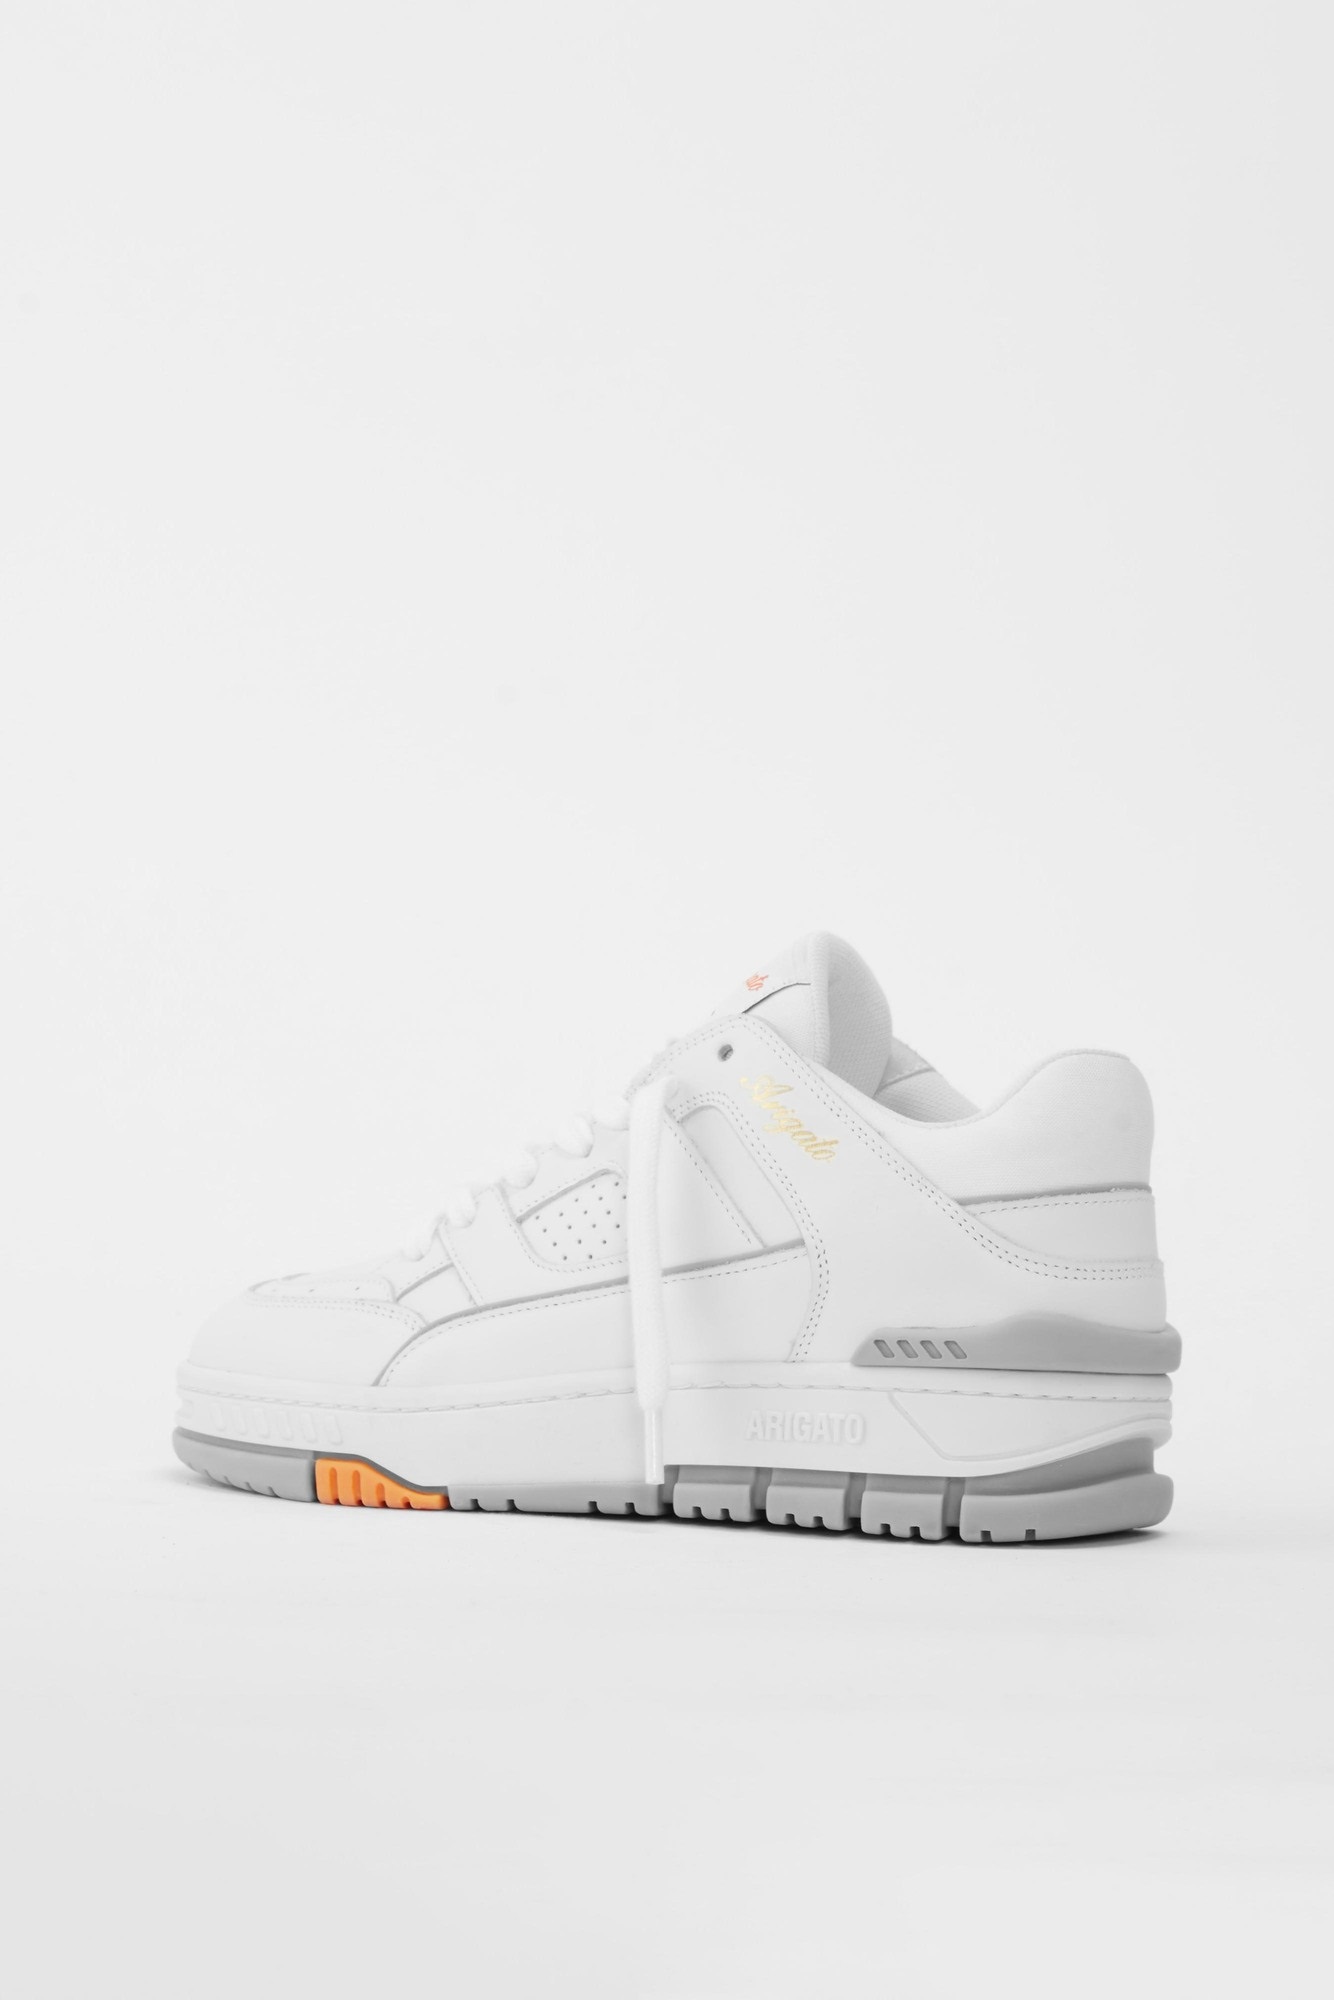 AXEL ARIGATO Area Sneaker in White/Grey 47